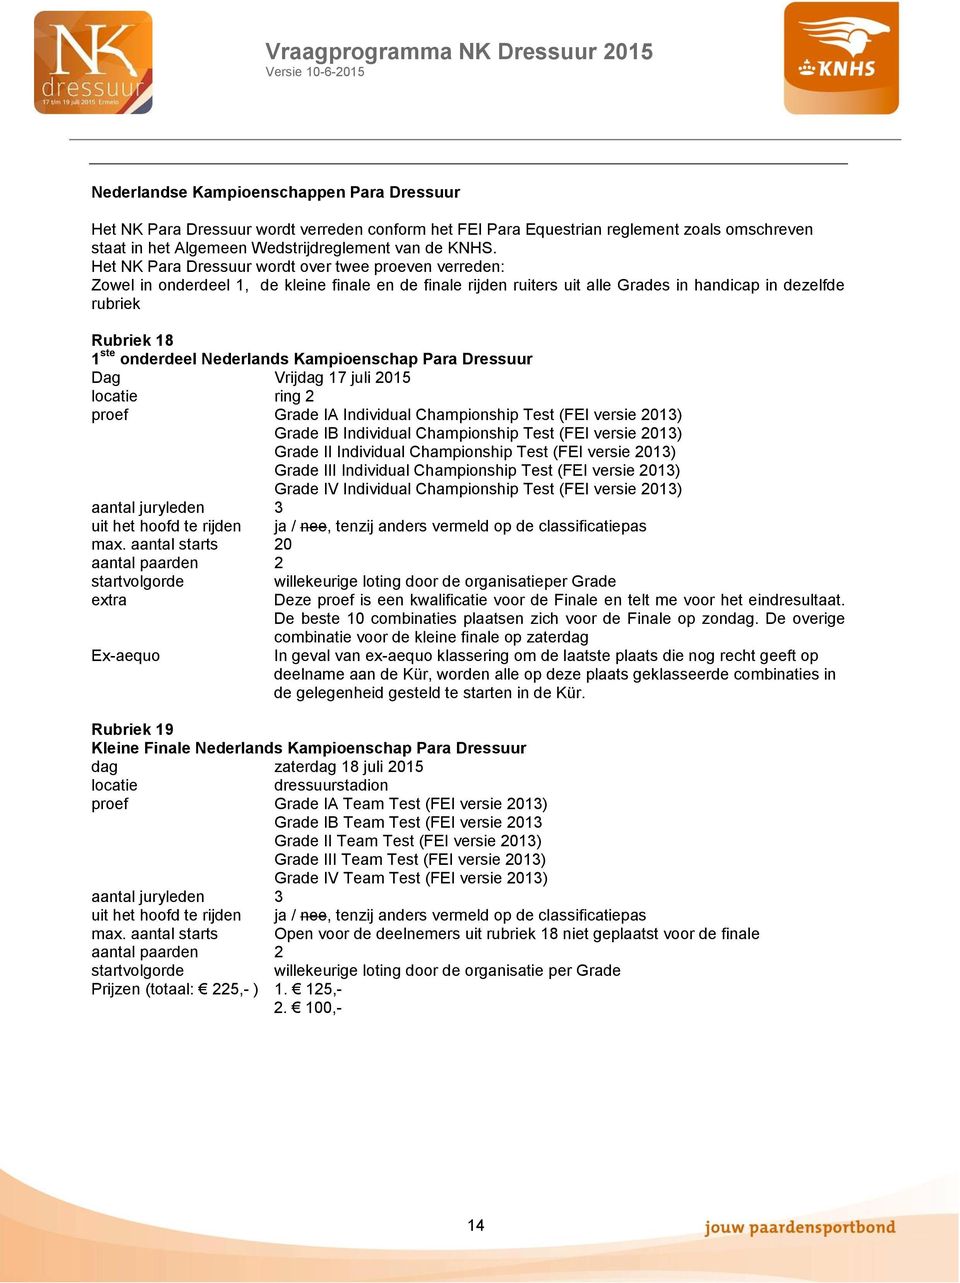 Nederlands Kampioenschap Para Dressuur Dag Vrijdag 17 juli 2015 ring 2 proef Grade IA Individual Championship Test (FEI versie 2013) Grade IB Individual Championship Test (FEI versie 2013) Grade II